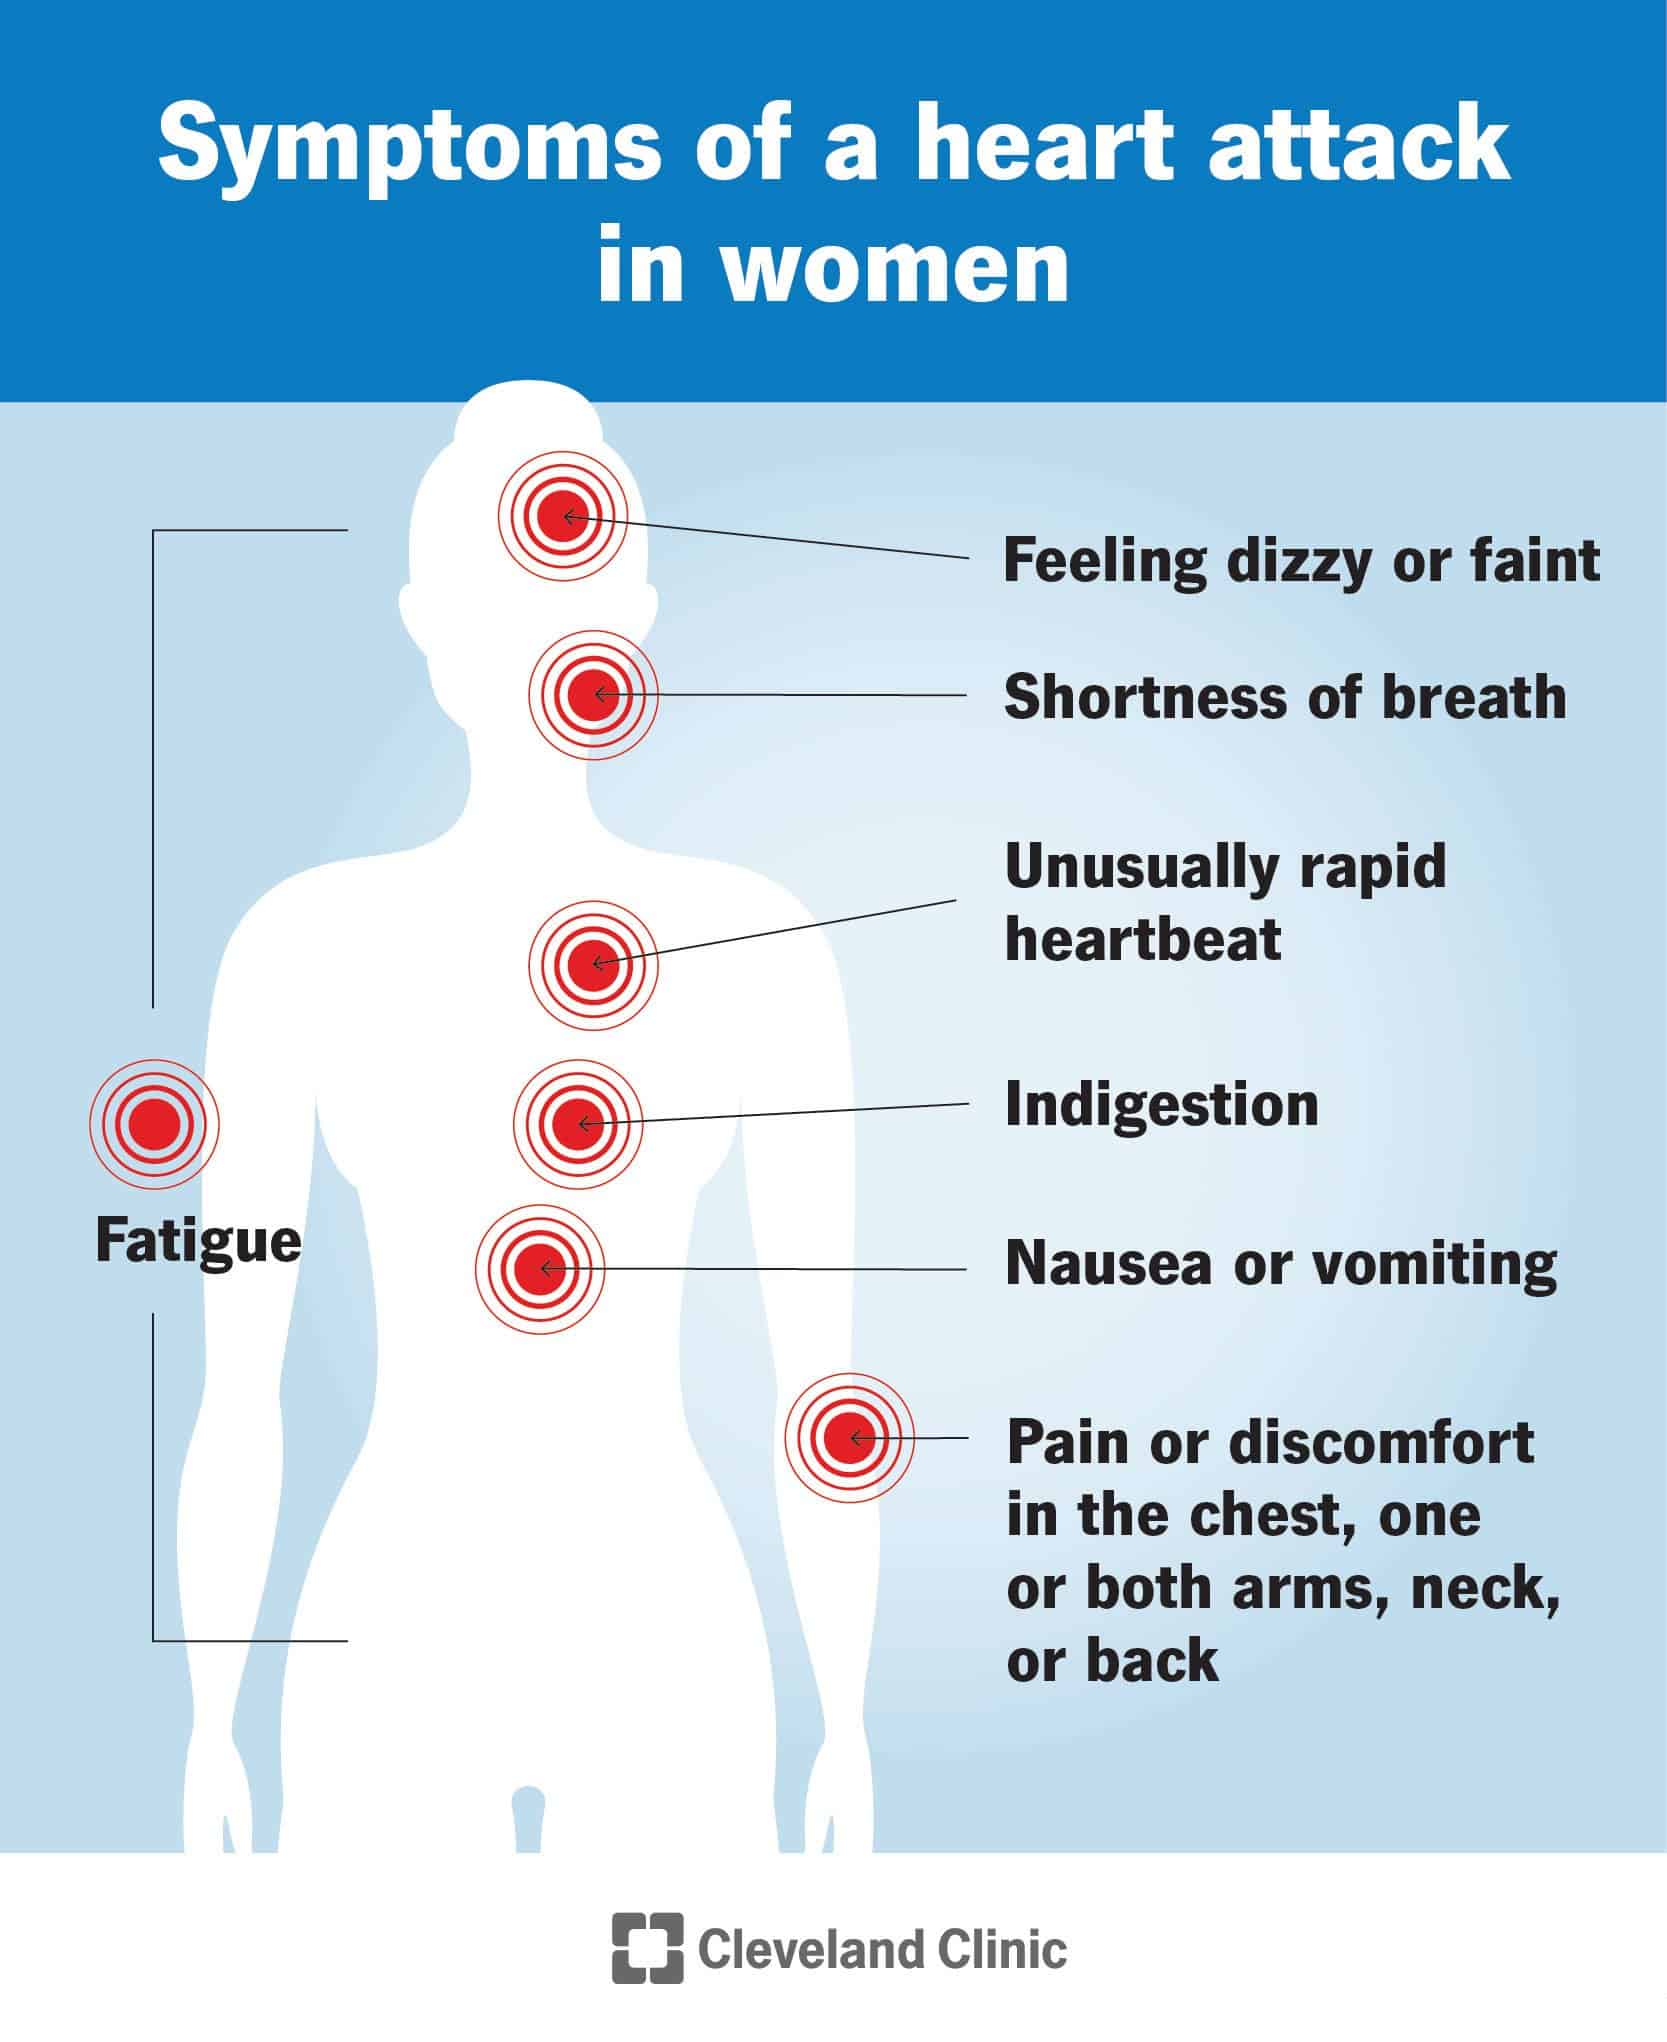 Heart Disease in Women: Risk Factors, Symptoms and Prevention